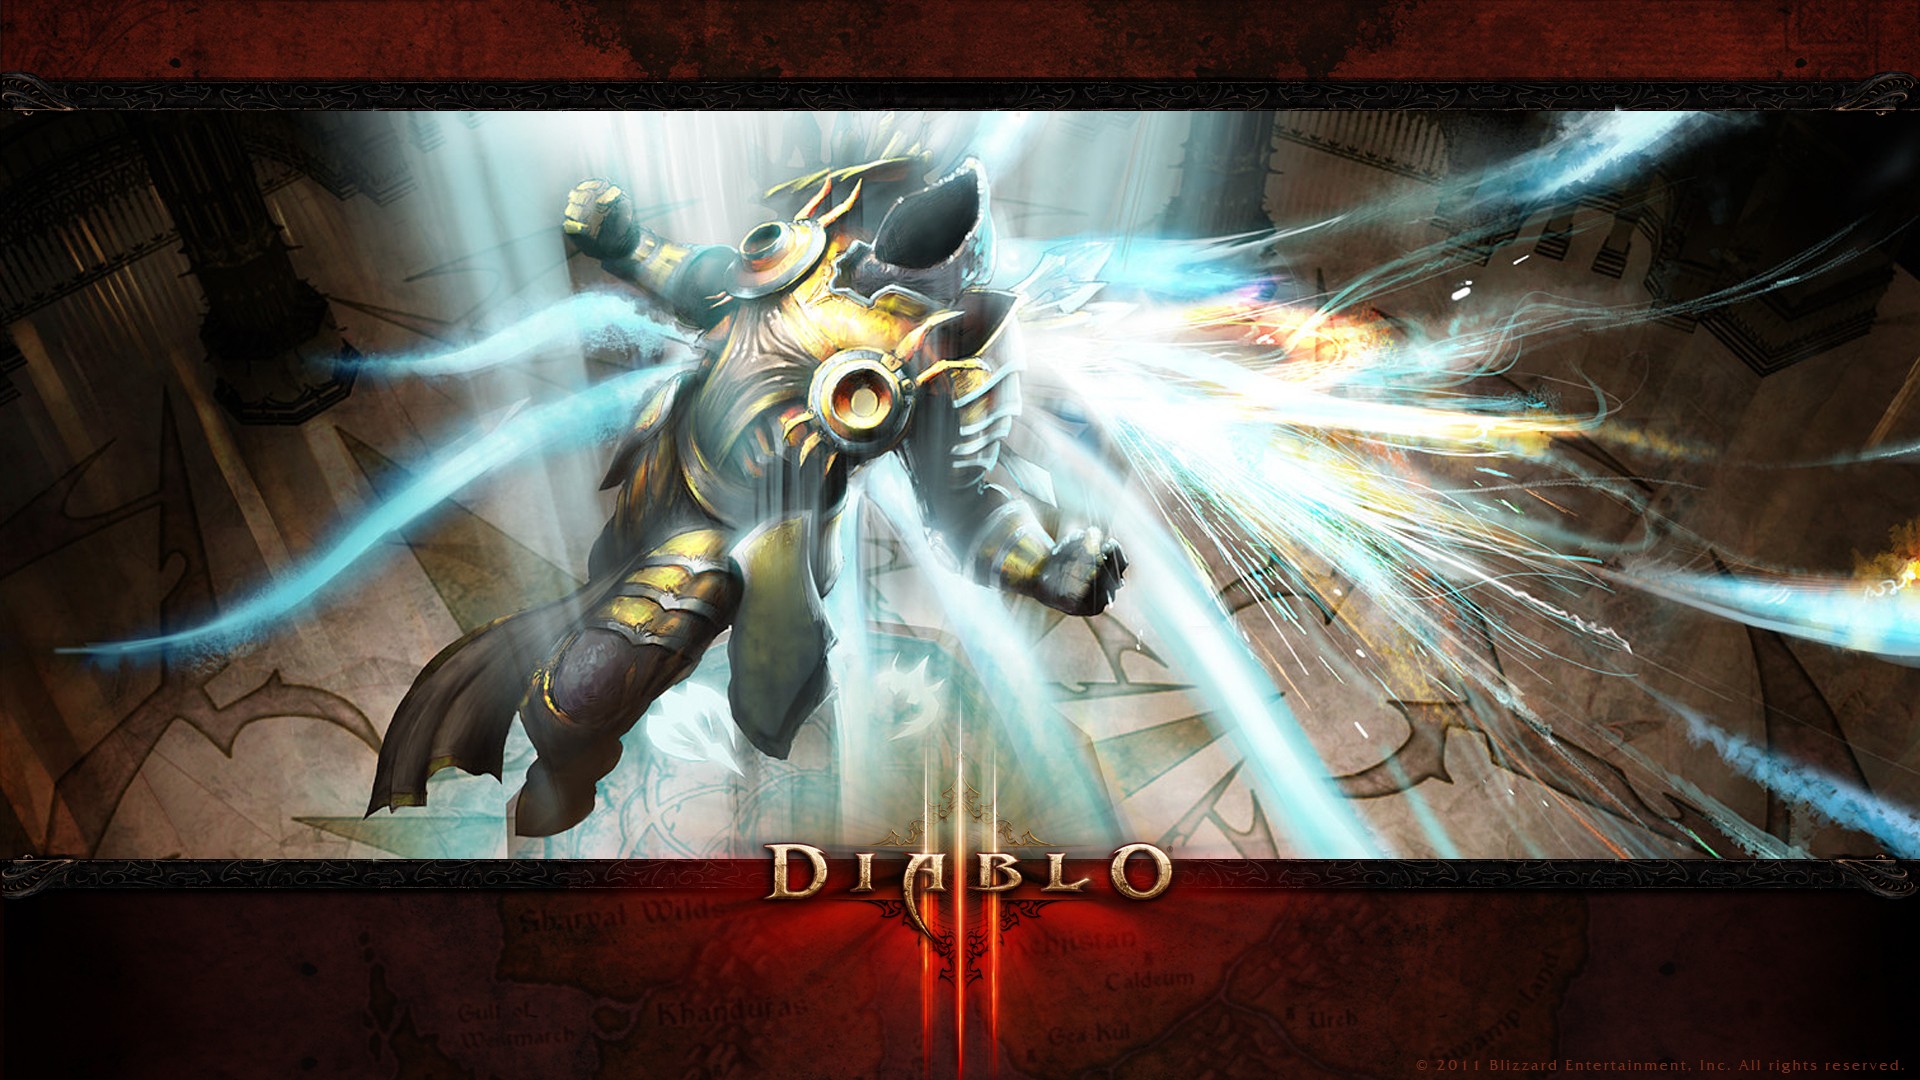 General 1920x1080 Blizzard Entertainment Diablo Diablo III Tyrael video games PC gaming 2011 (Year) fantasy art